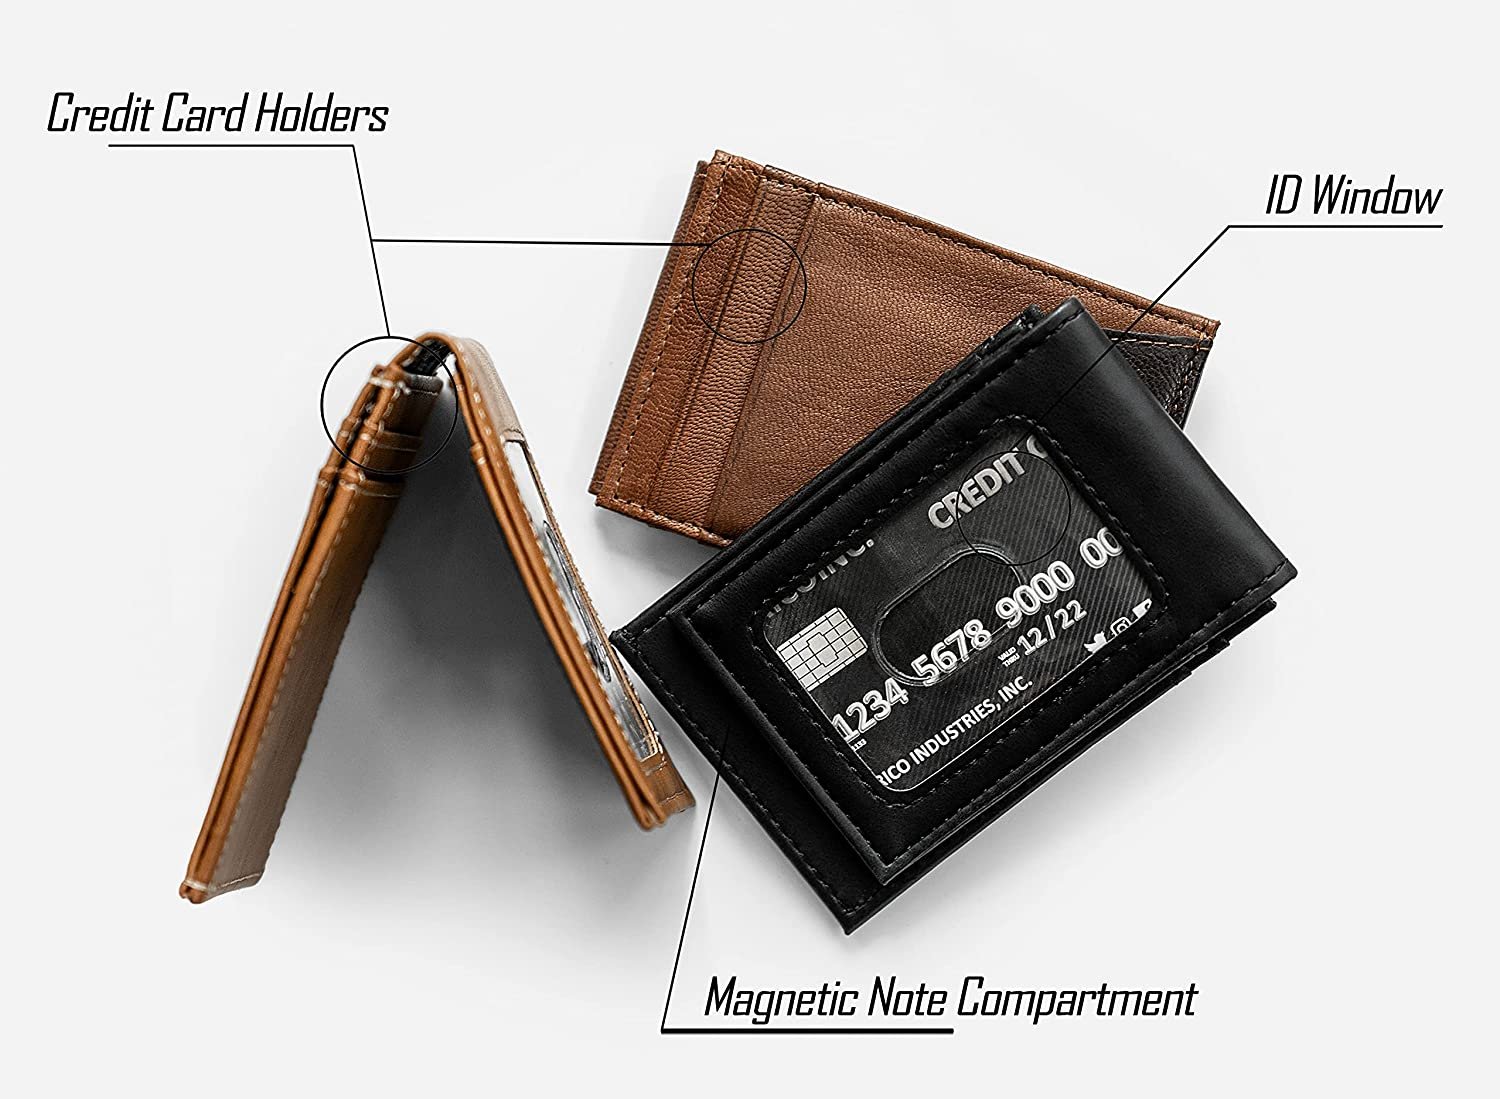 Toronto Maple Leafs Premium Brown Leather Wallet, Front Pocket Magnetic Money Clip, Laser Engraved, Vegan